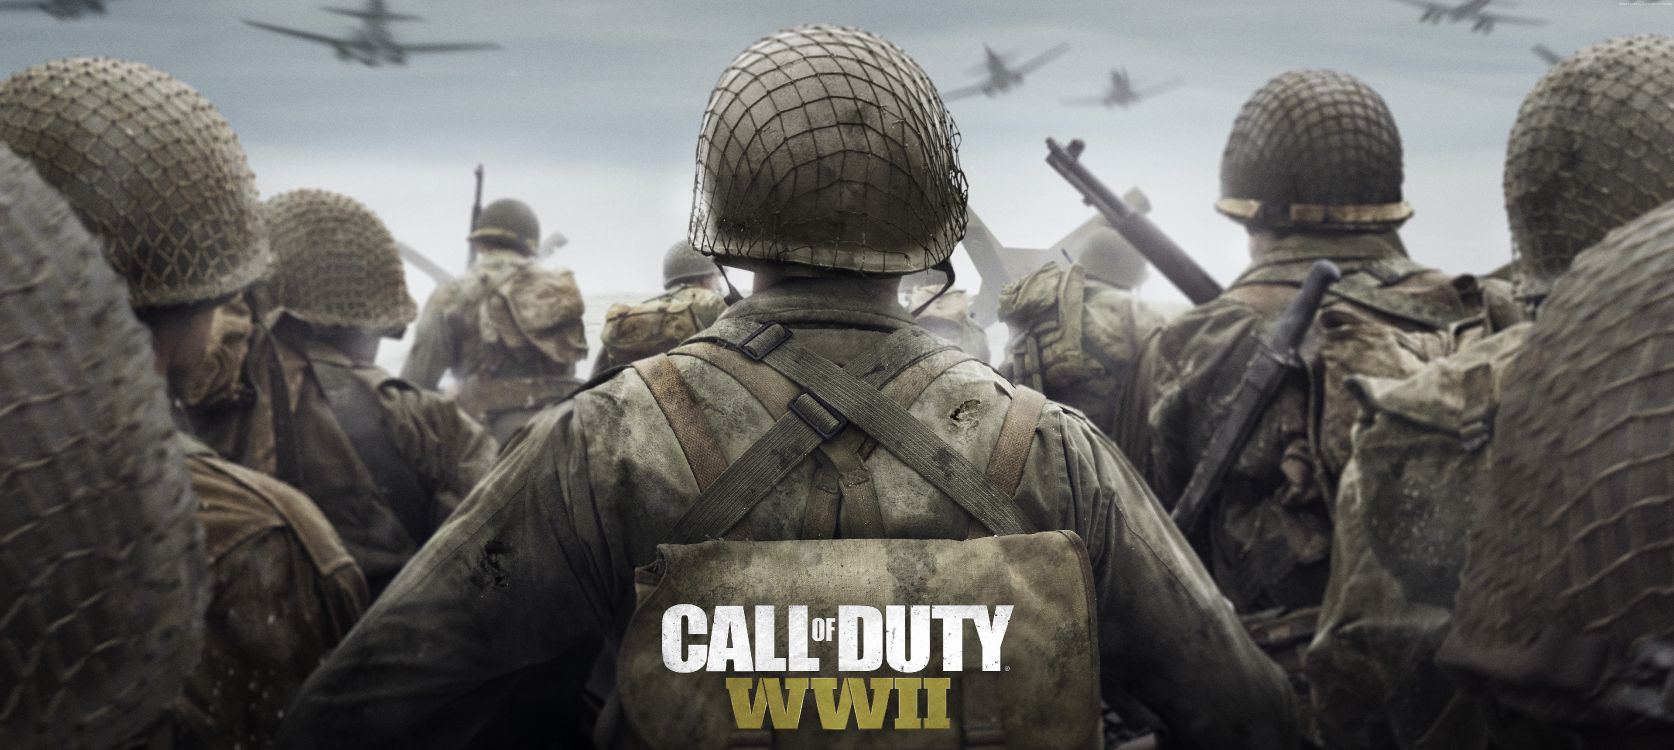 Call of Duty Ww2, Call of Duty de la Seconde GUERRE Mondiale, Activision, Sledgehammer Games, Soldat. Wallpaper in 7190x3220 Resolution